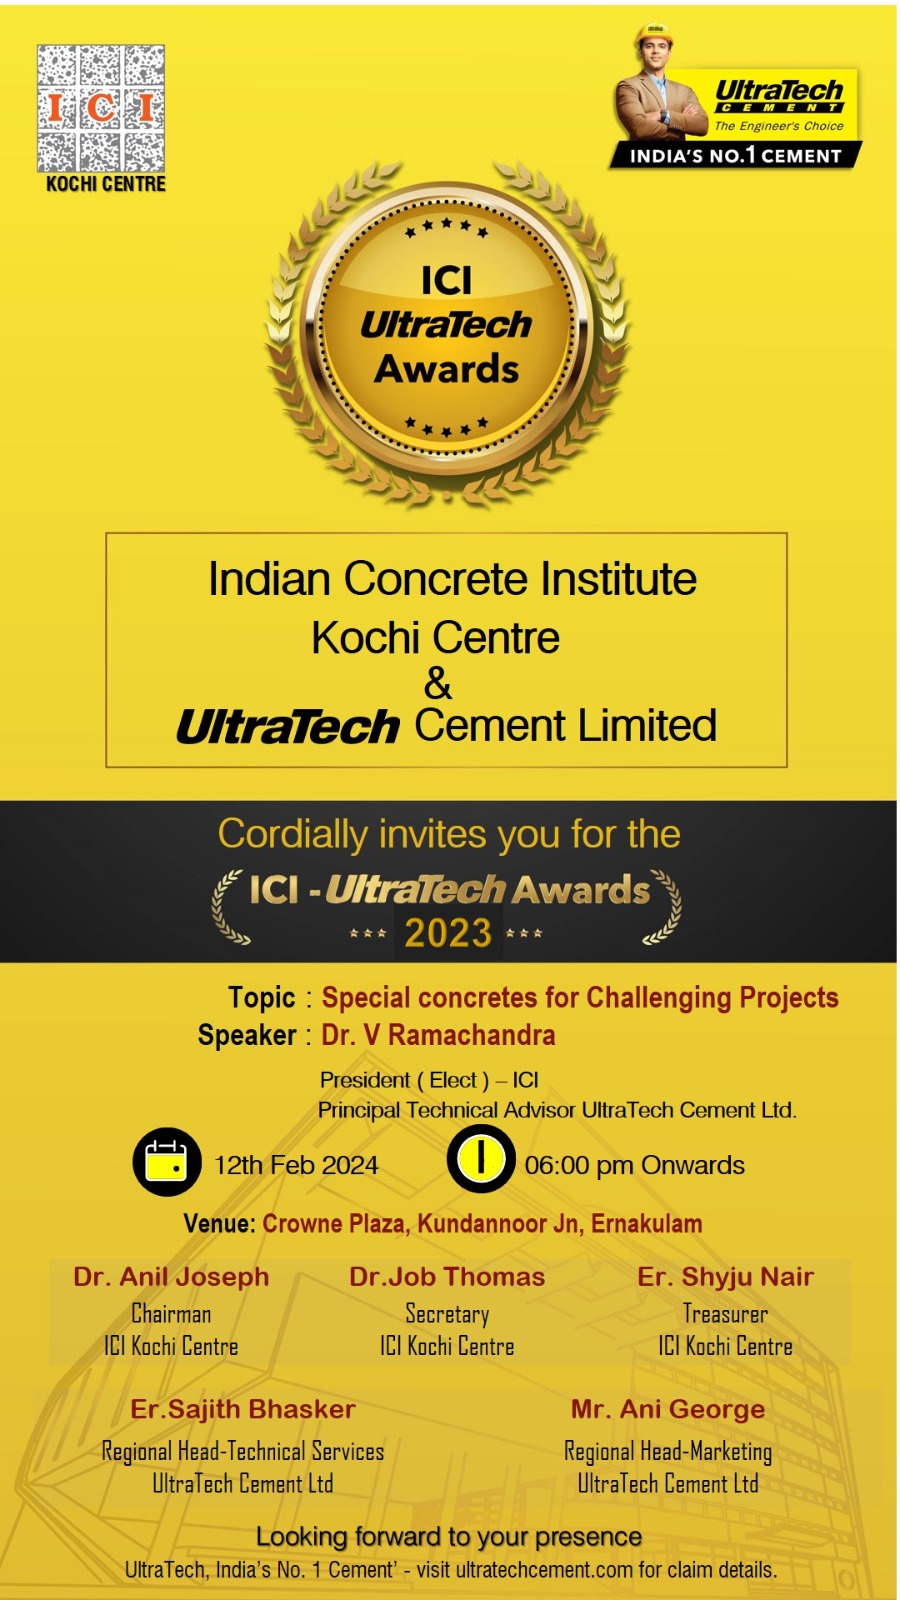 ICI UltraTech Awards